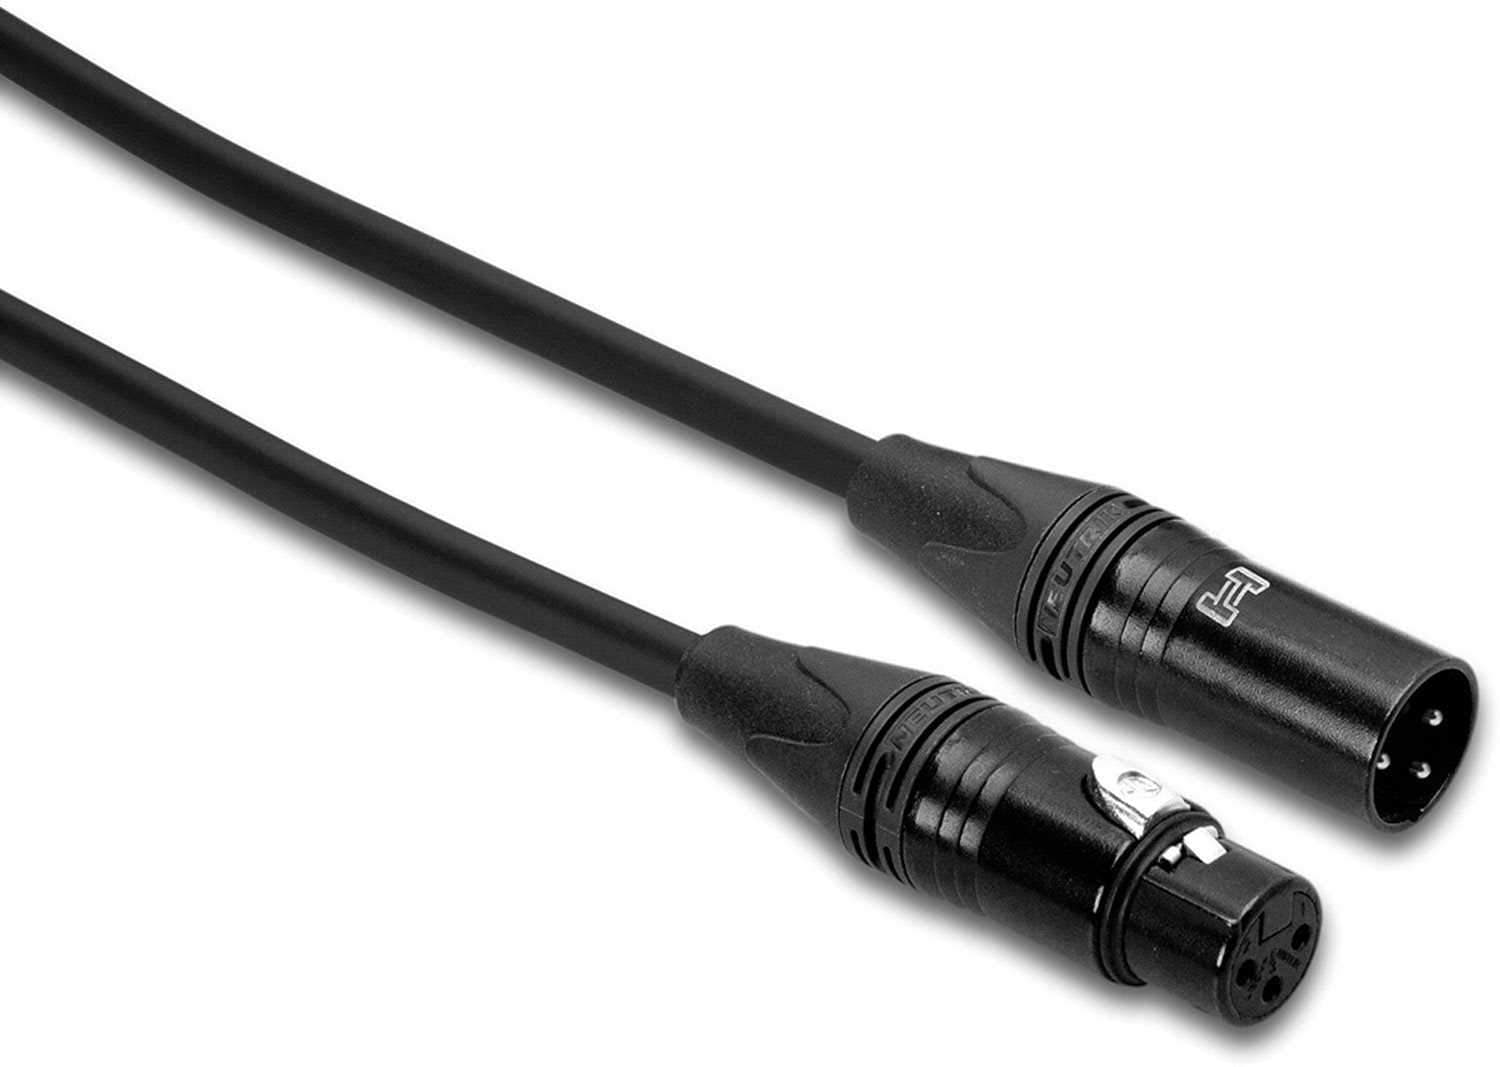 Hosa CMK-005AU 5 Ft Premium Microphone Cable XLR to XLR - ProSound and Stage Lighting